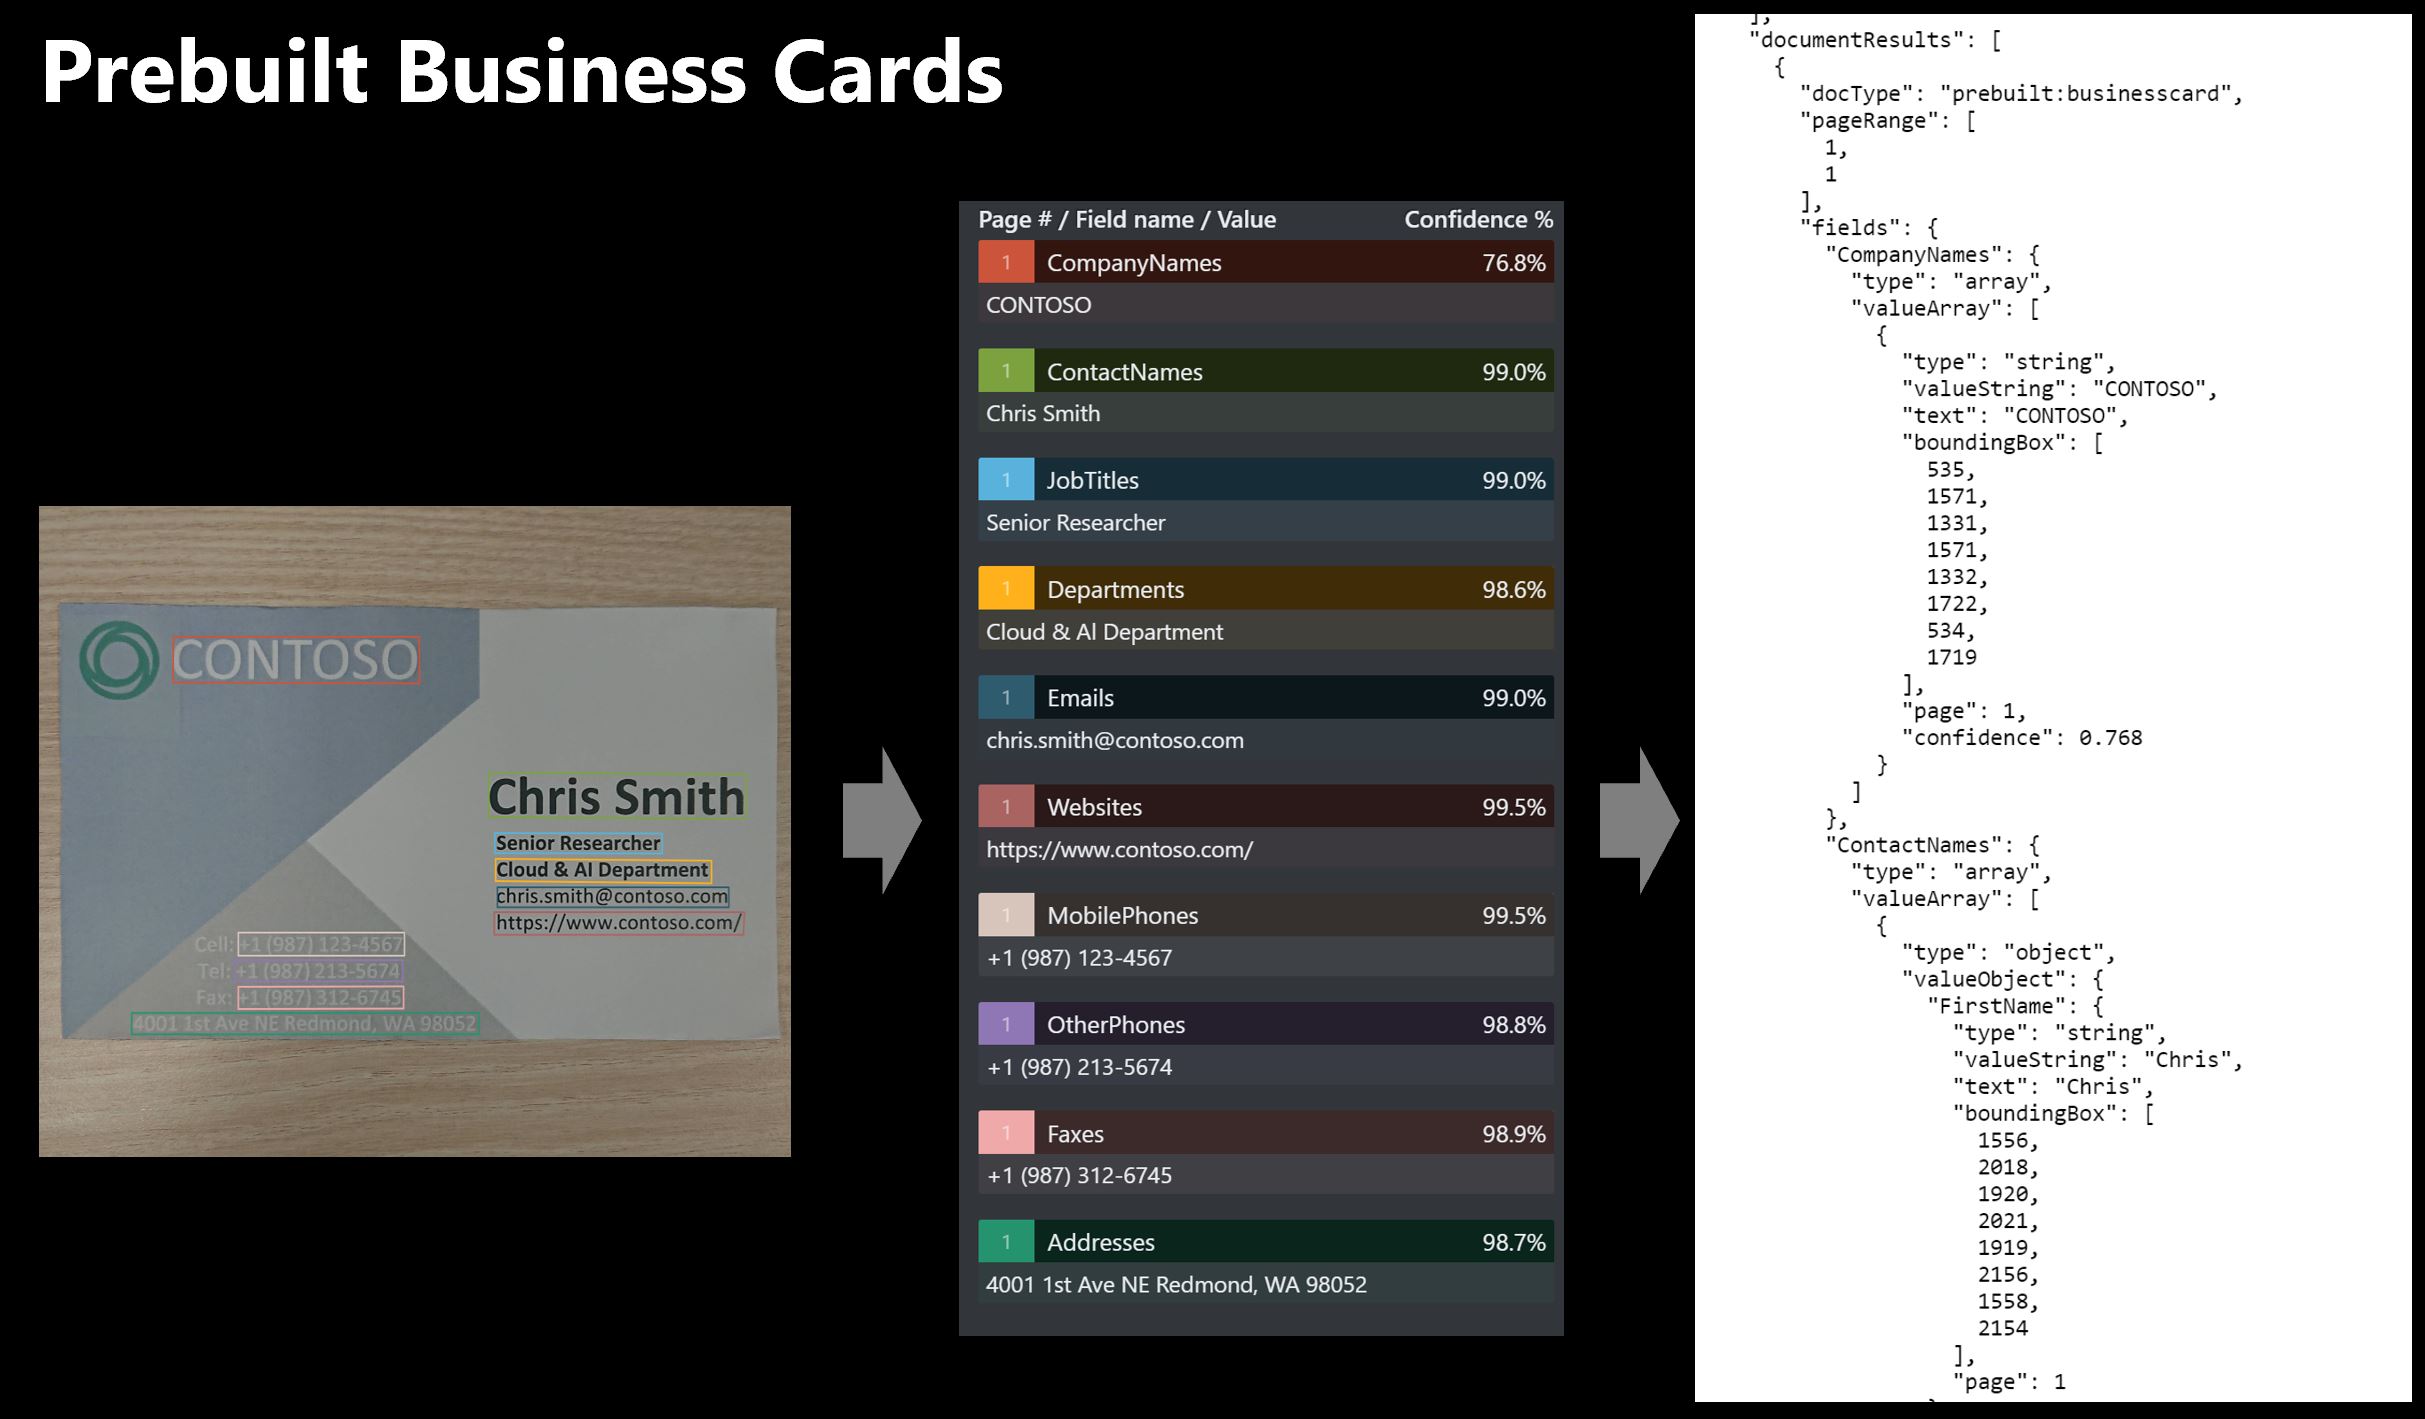 Prebuilt business card example.